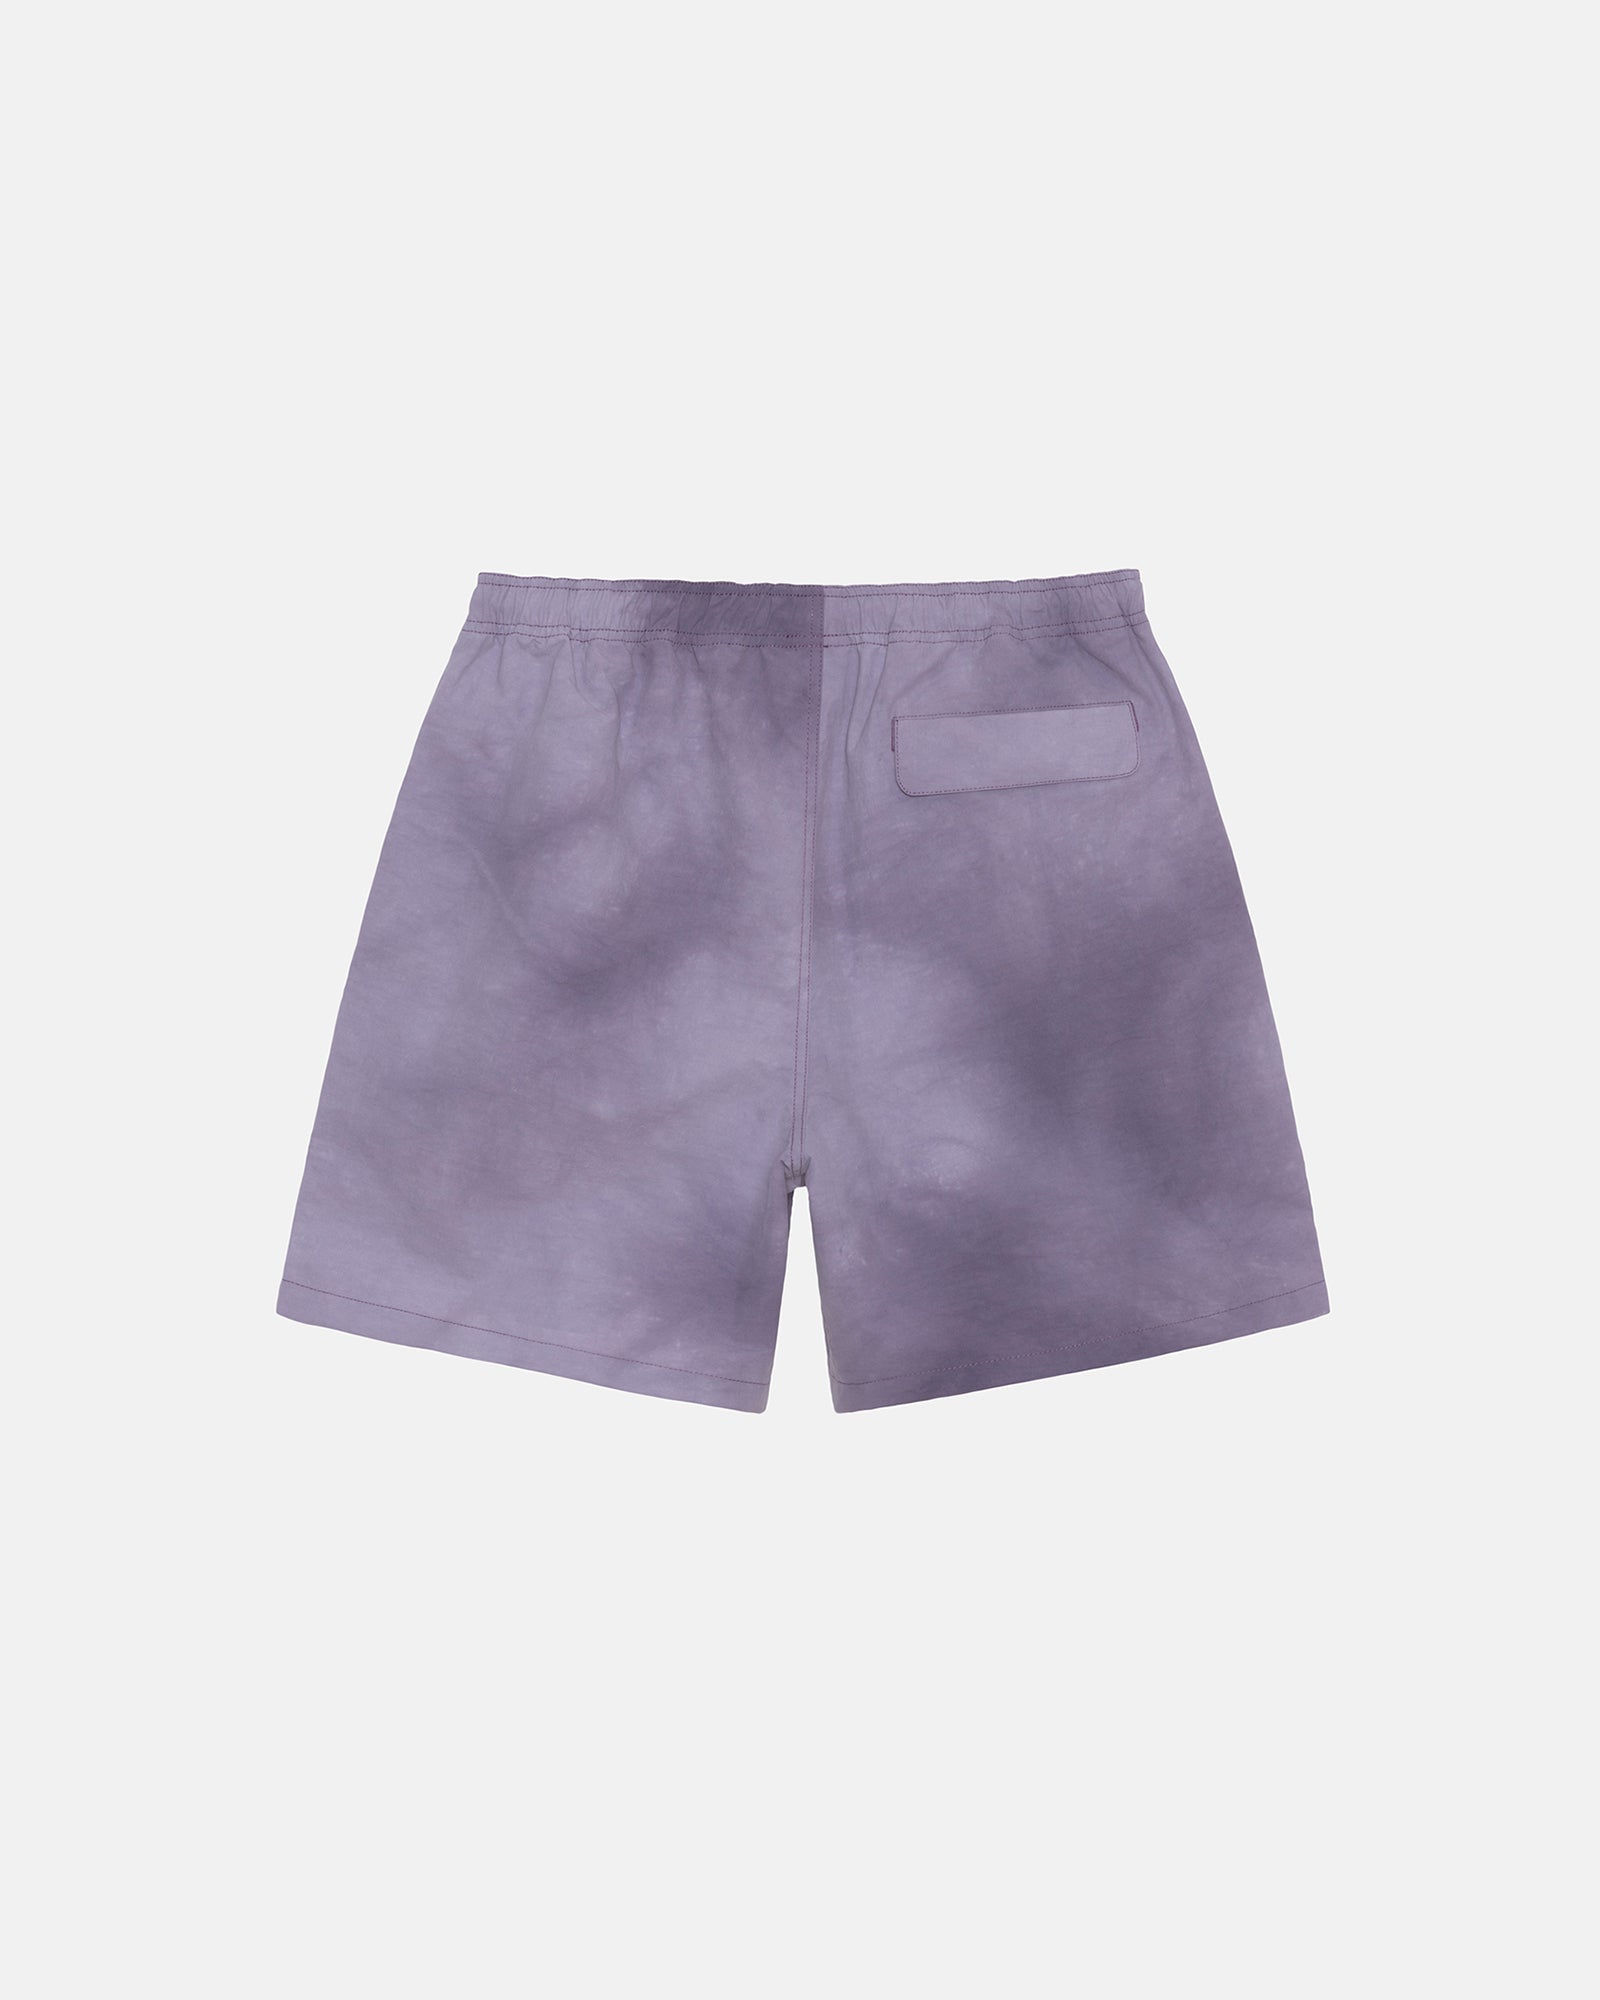 Stüssy Nylon Short Wave Dye Grape Shorts